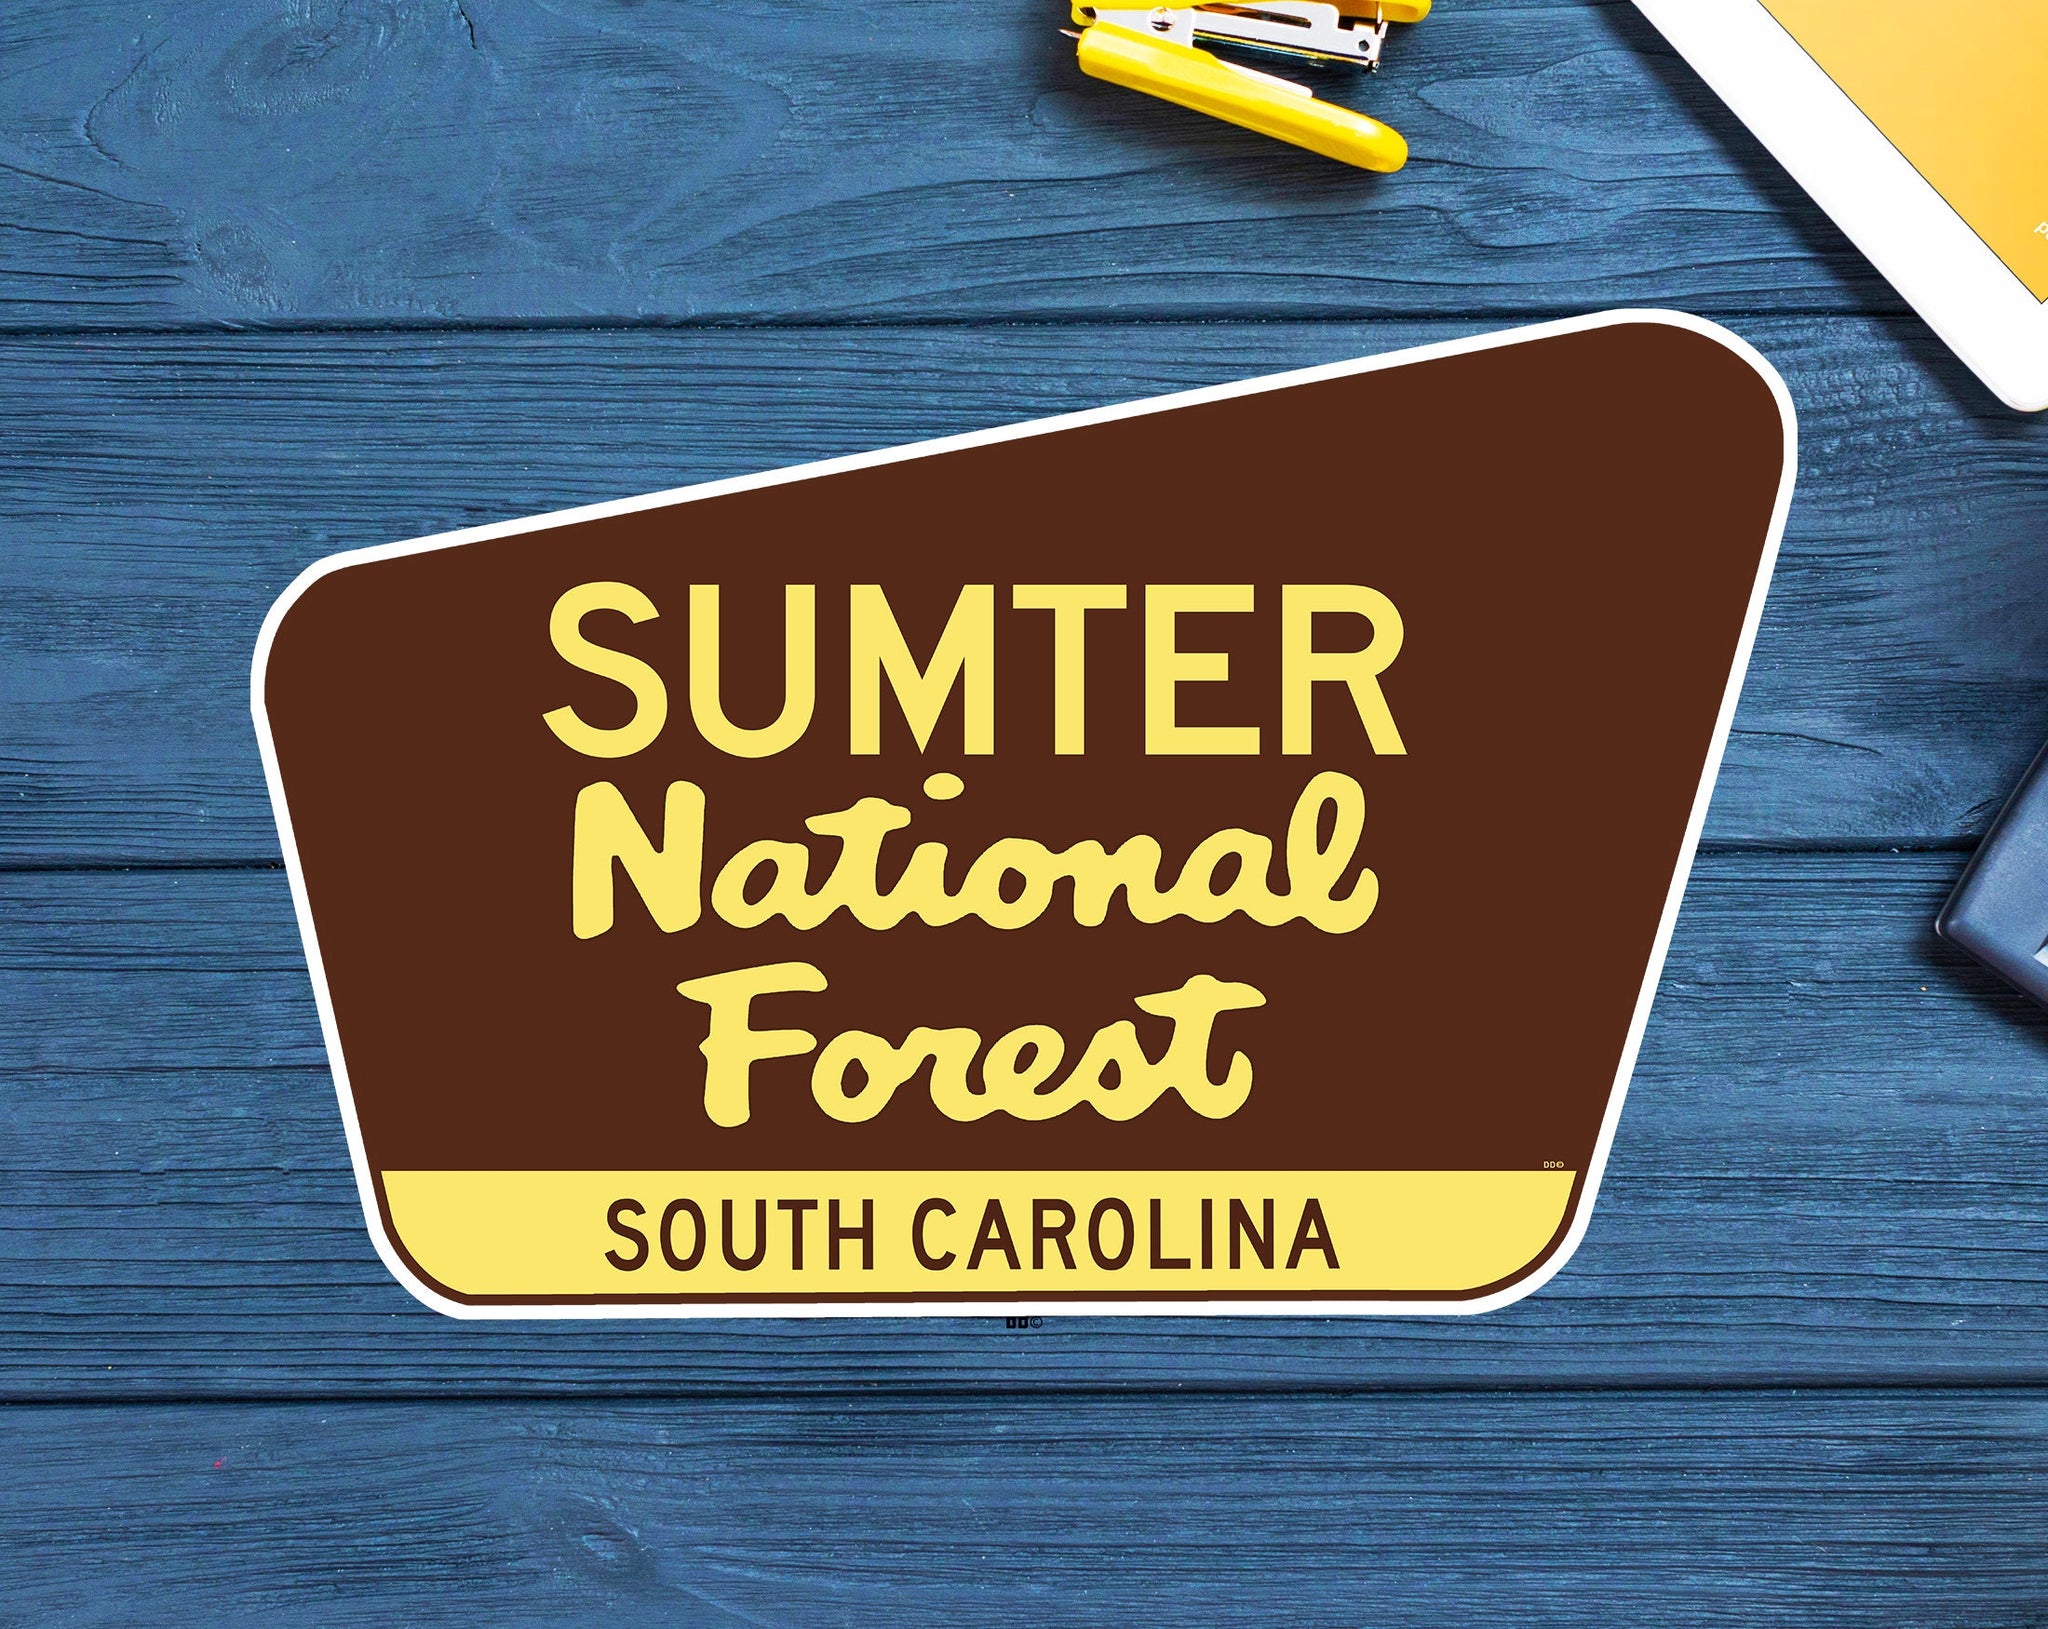 Sumter National Forest Decal Sticker 3.75" x 2.5" South Carolina Park Vinyl